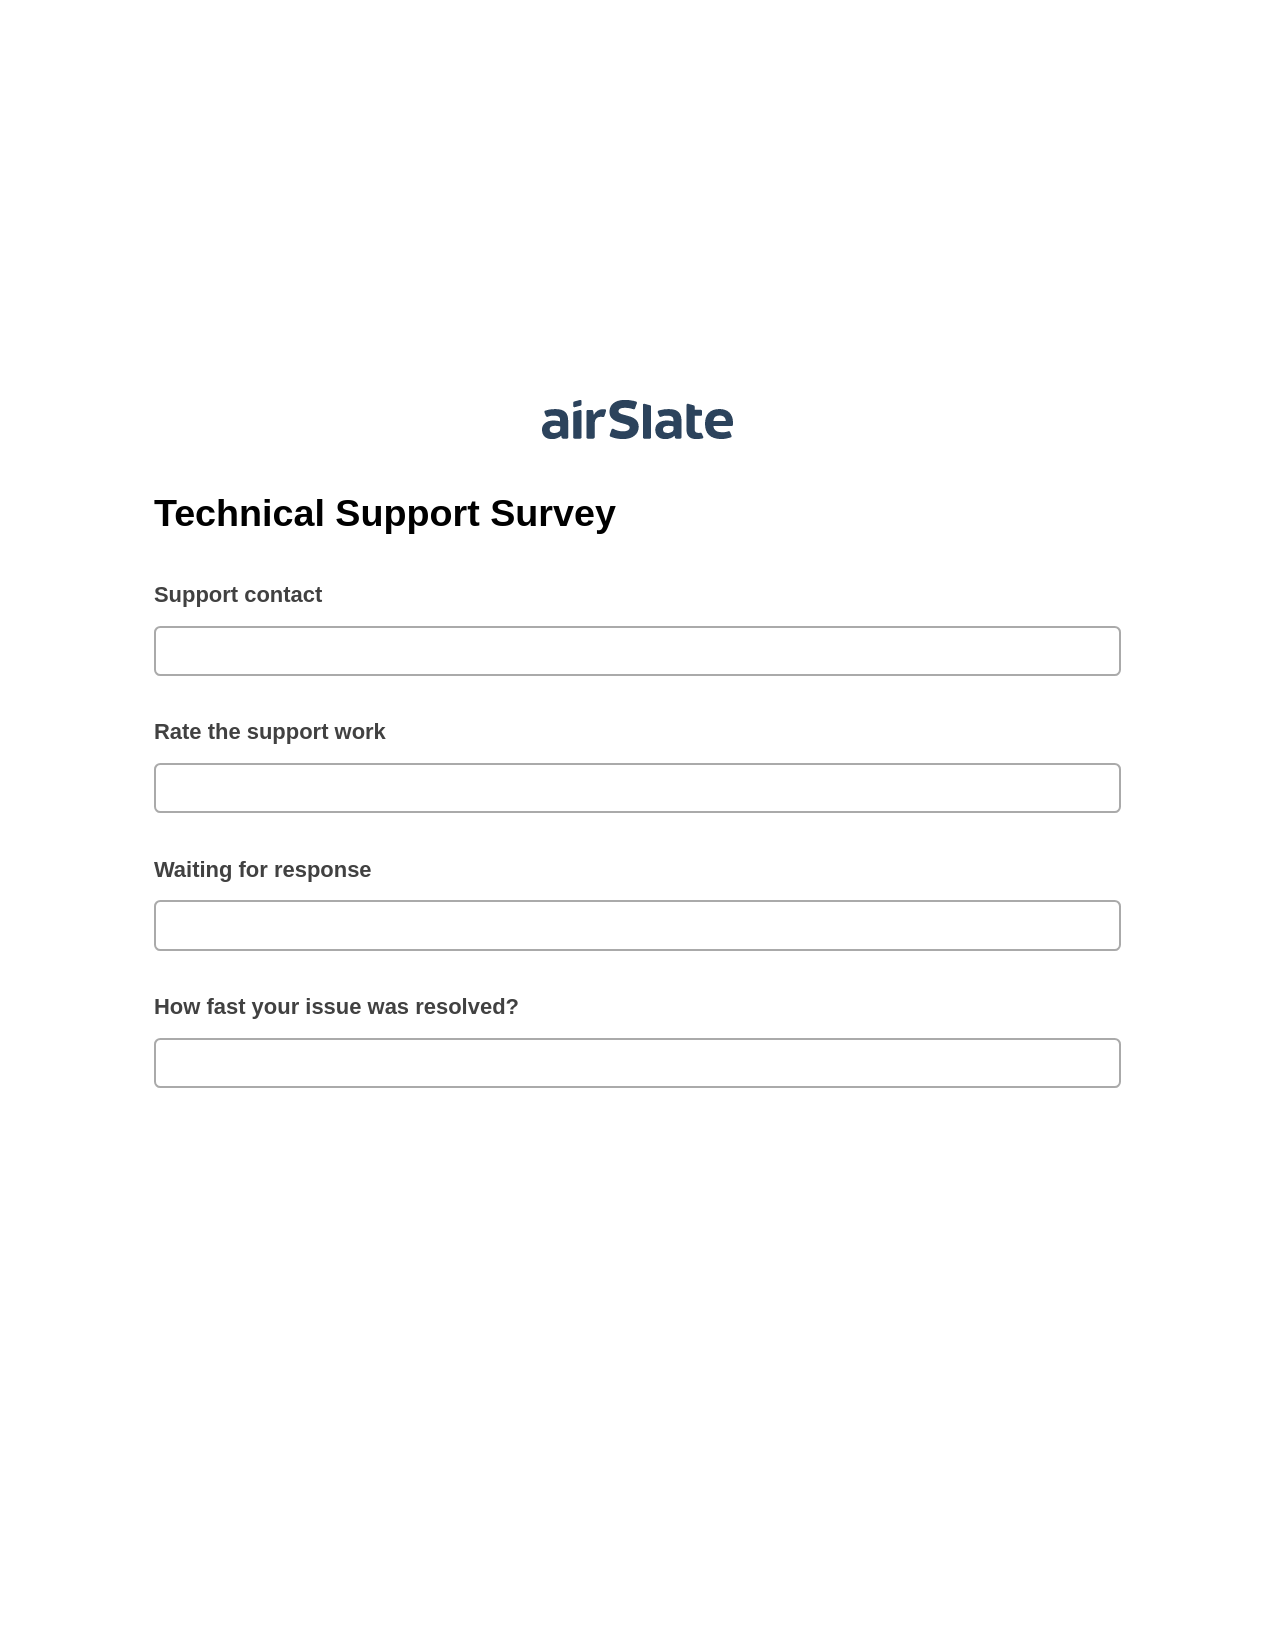 Technical Support Survey Pre-fill Document Bot, Update Salesforce Records Bot, Slack Notification Postfinish Bot